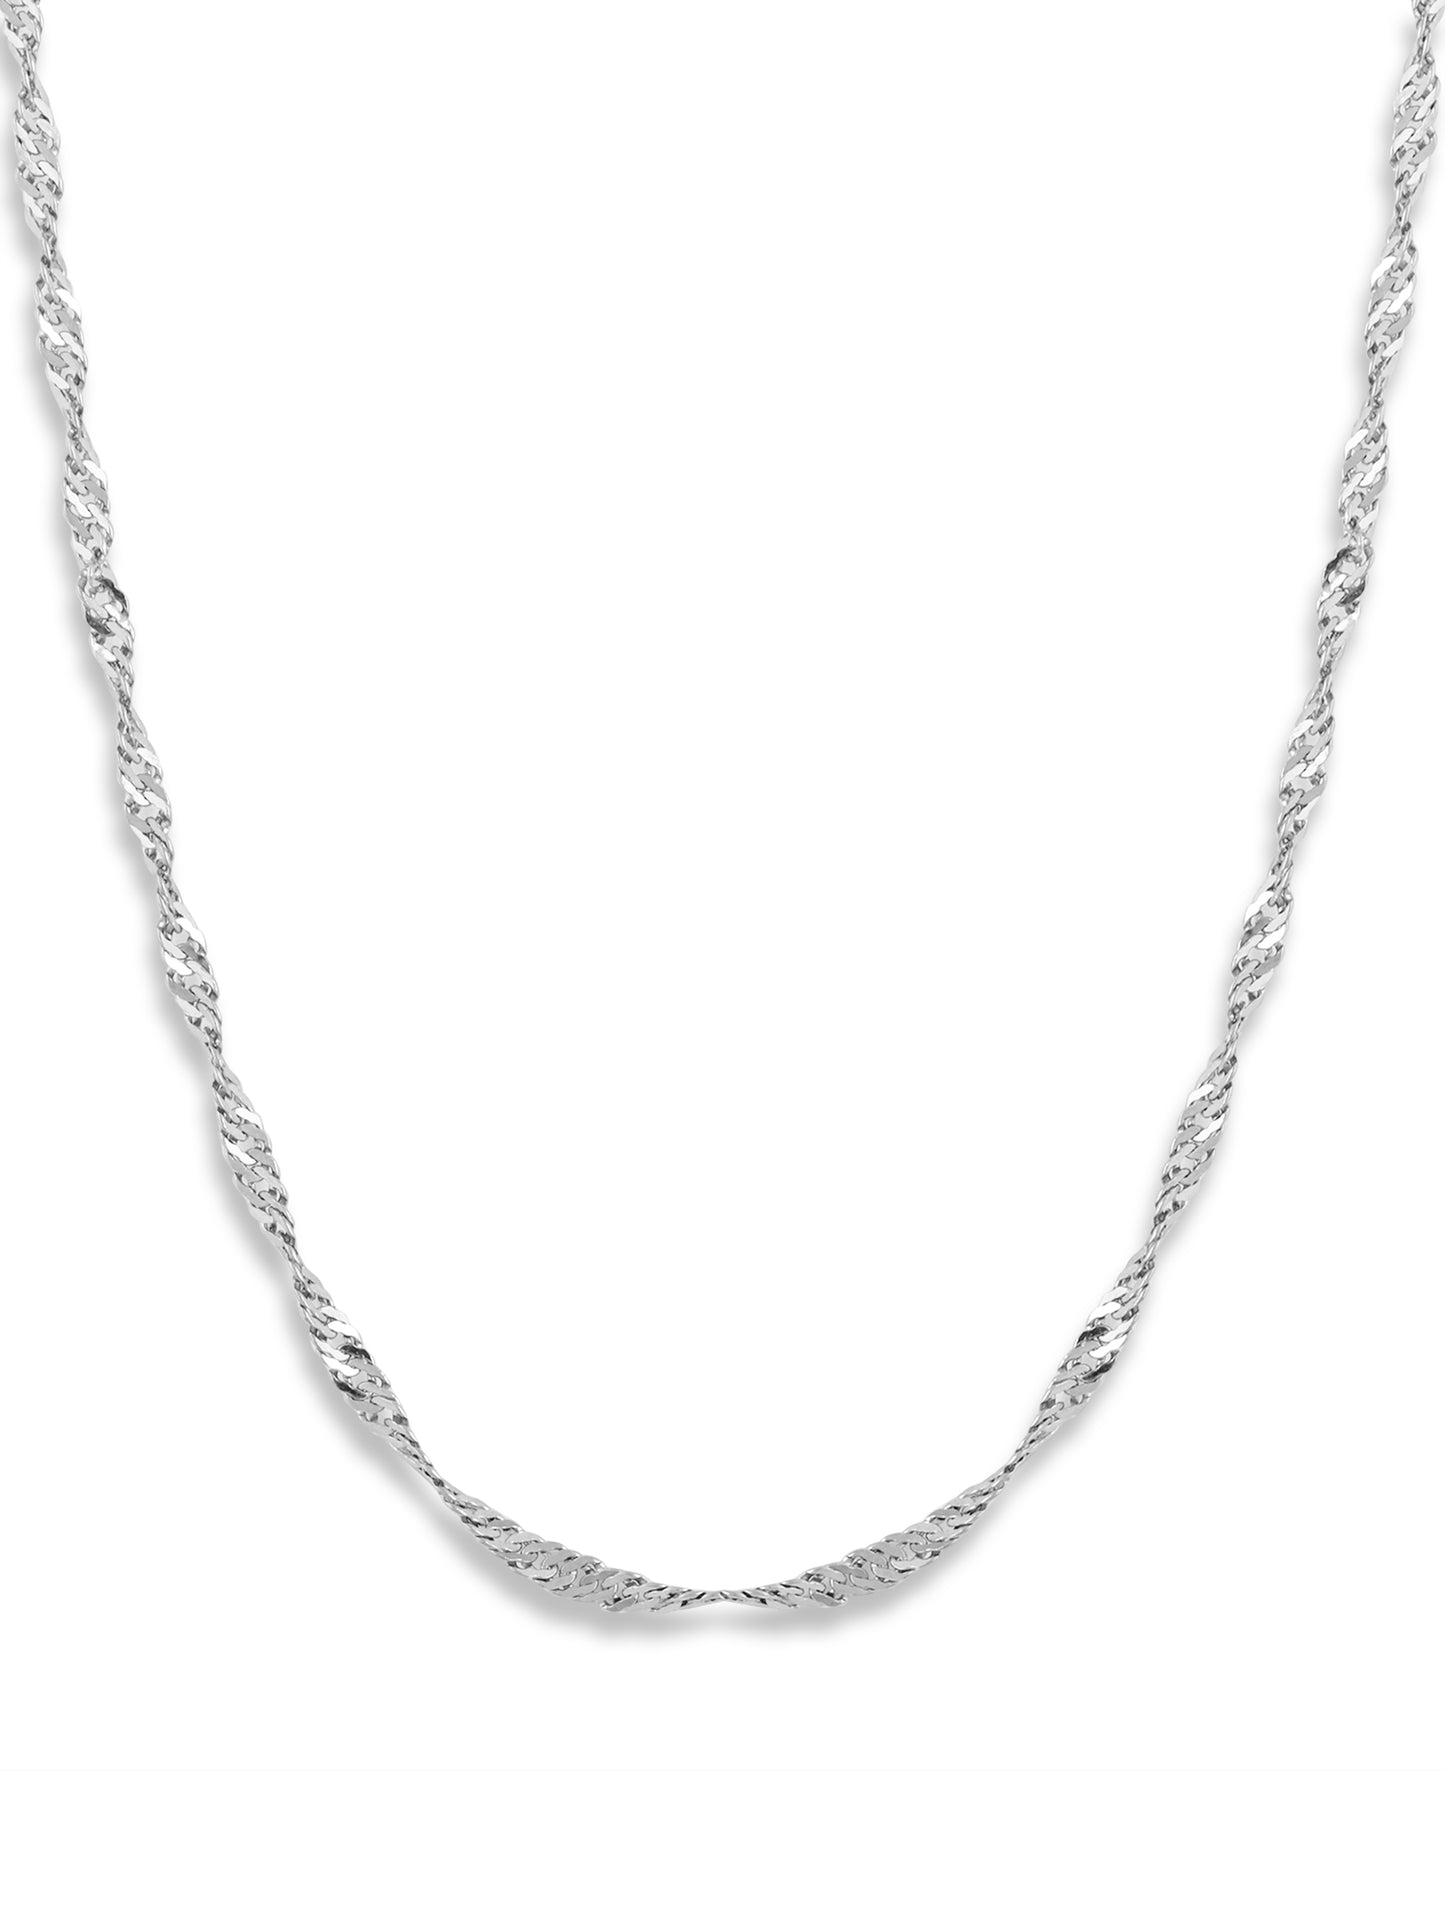 Unisex Rope chain White gold Chain